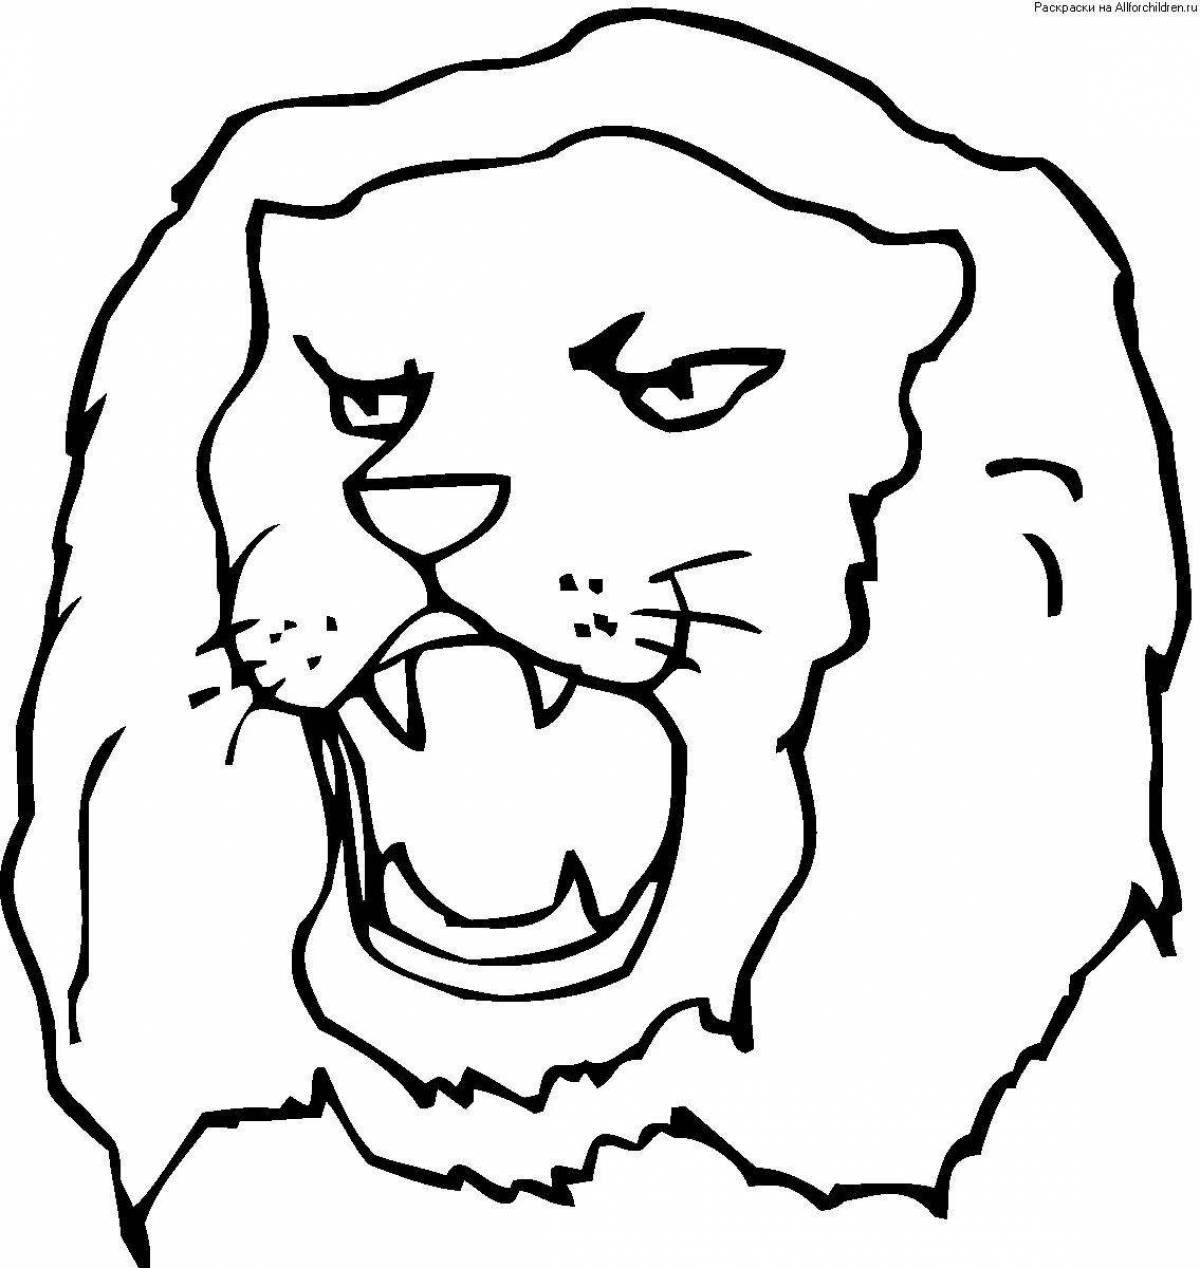 Coloring book bright lion head